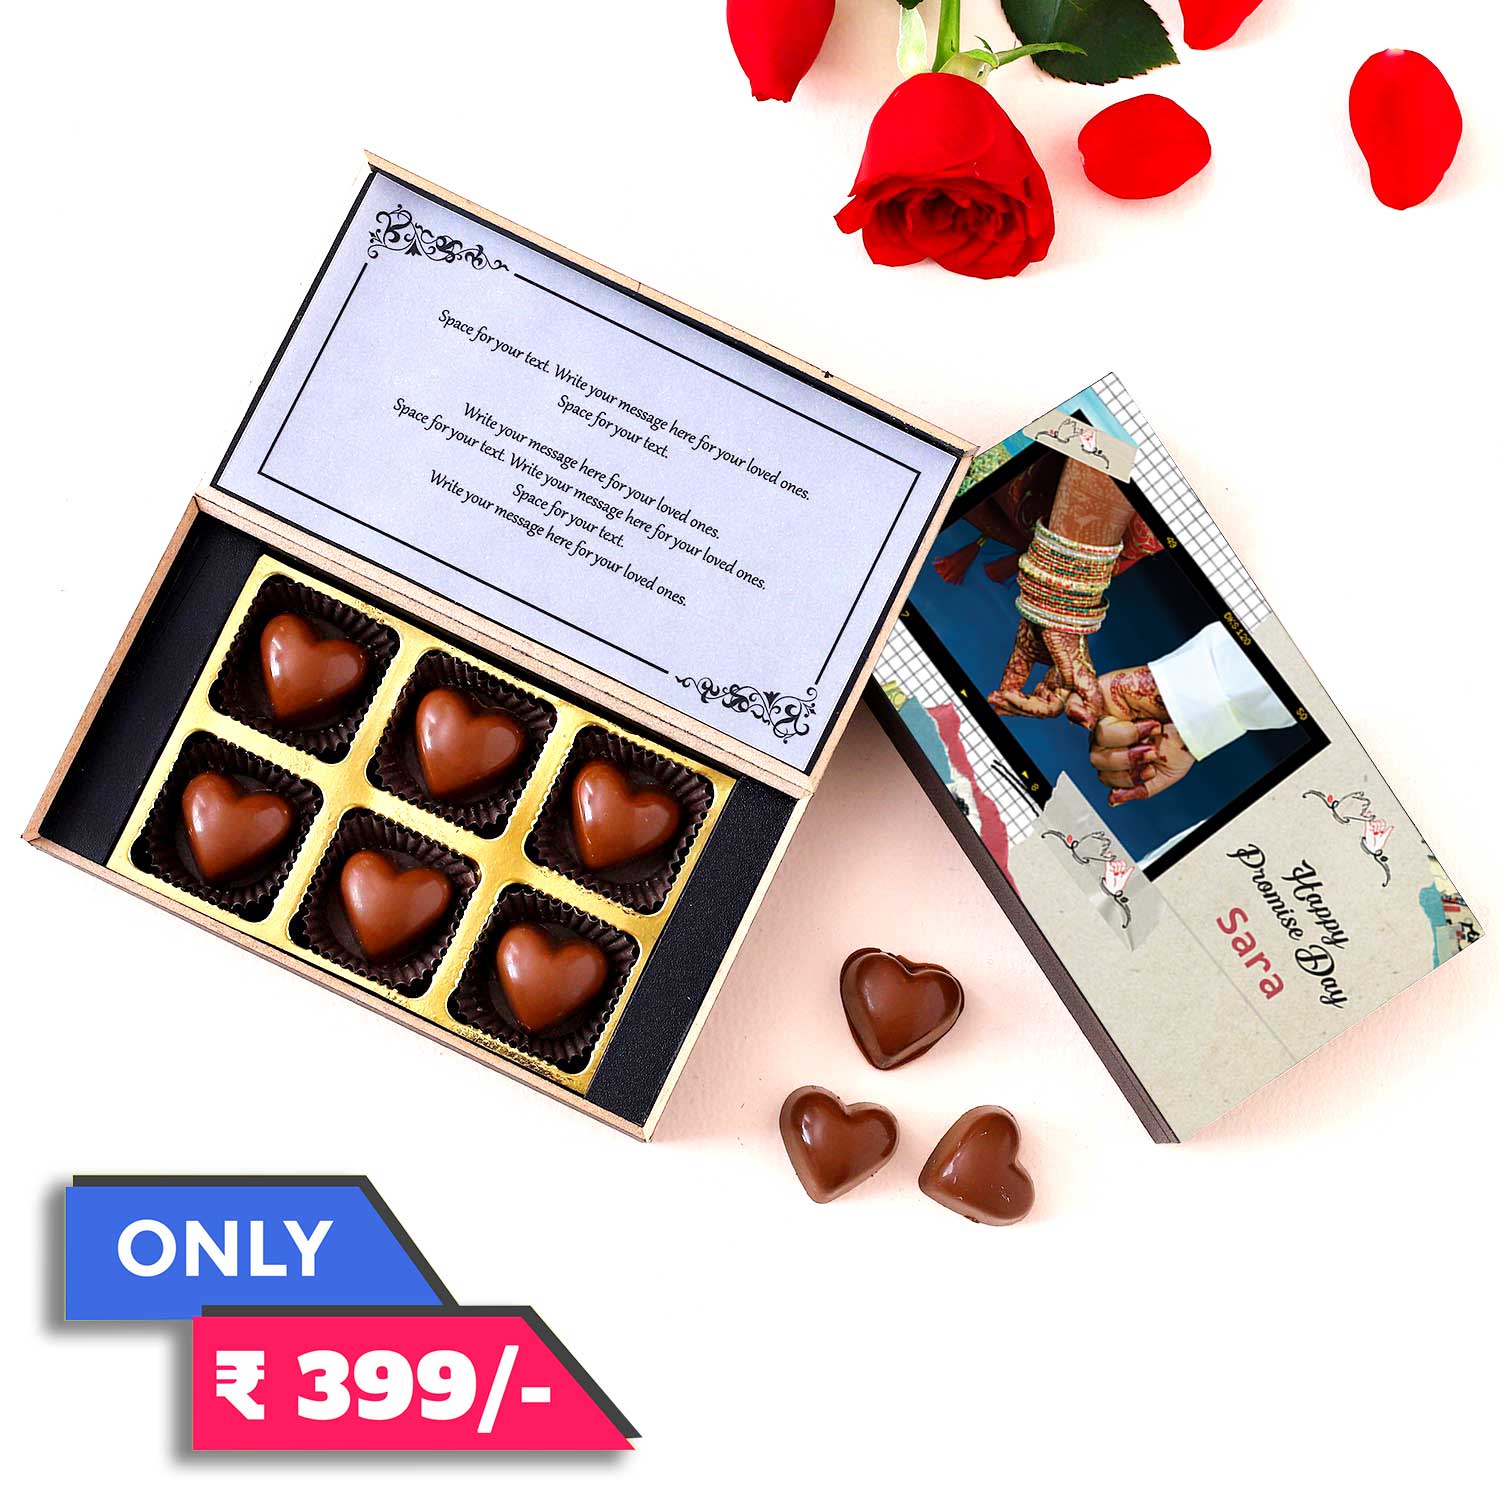 Promise Day Personalised  Chocolate gift I Buy at Choco ManualART